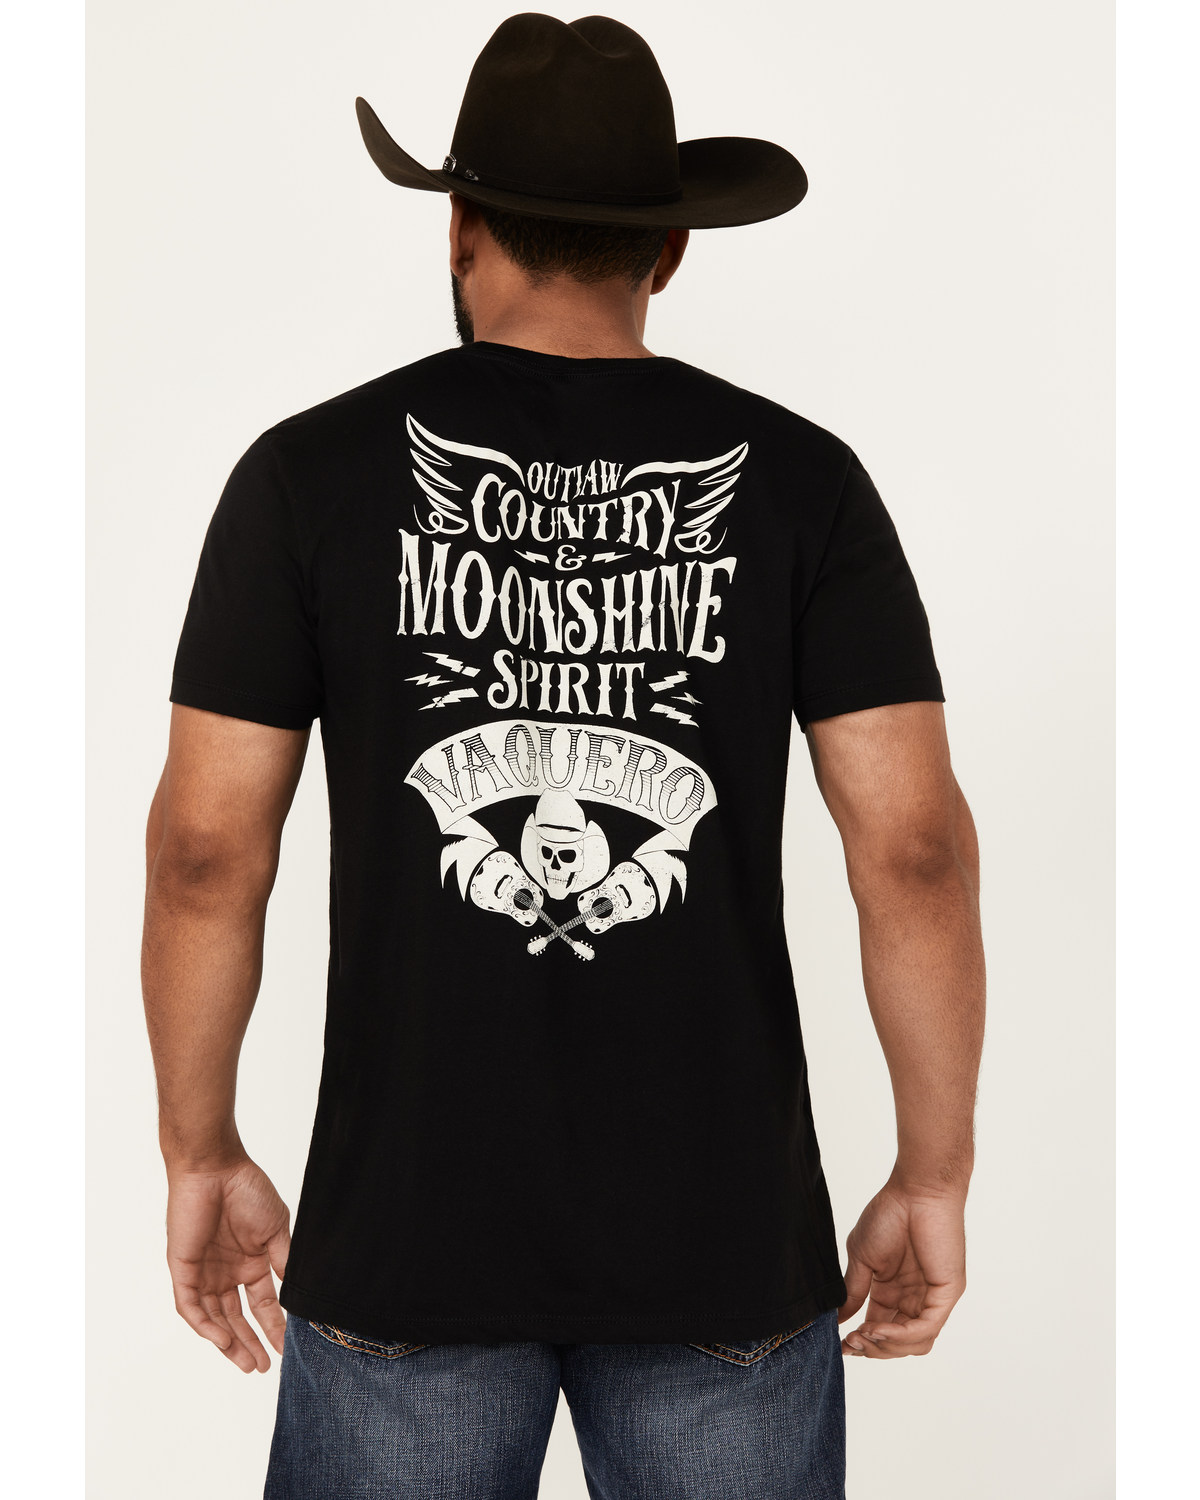 Moonshine Spirit Men's Vaquero Short Sleeve Graphic T-Shirt